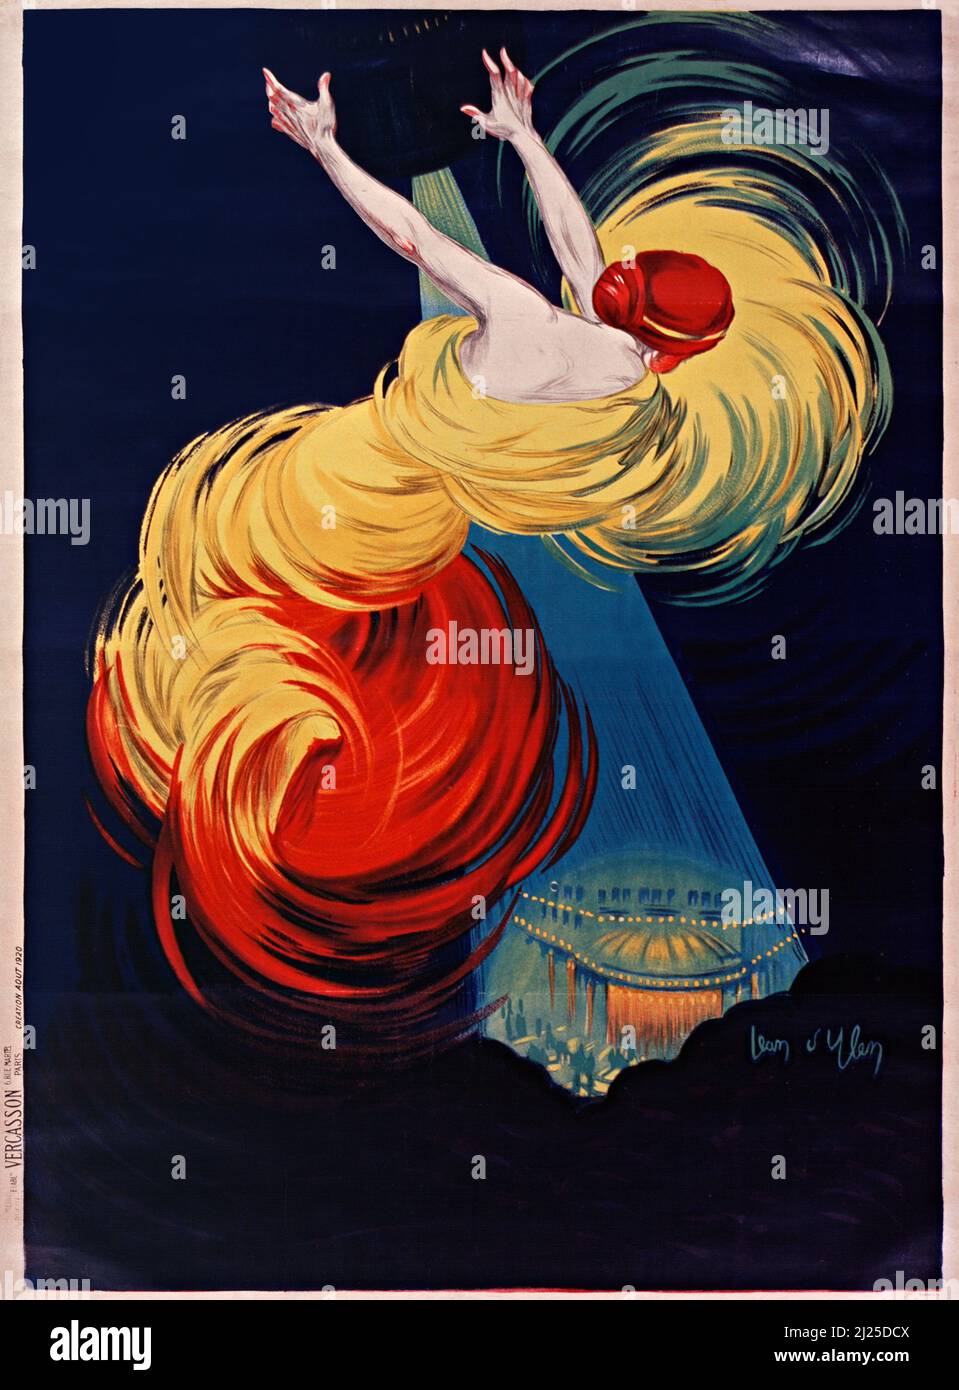 Annuncio vintage di Jean d'Ylen - Danse de Moscou (1920) - Poster Old advertisement. Foto Stock